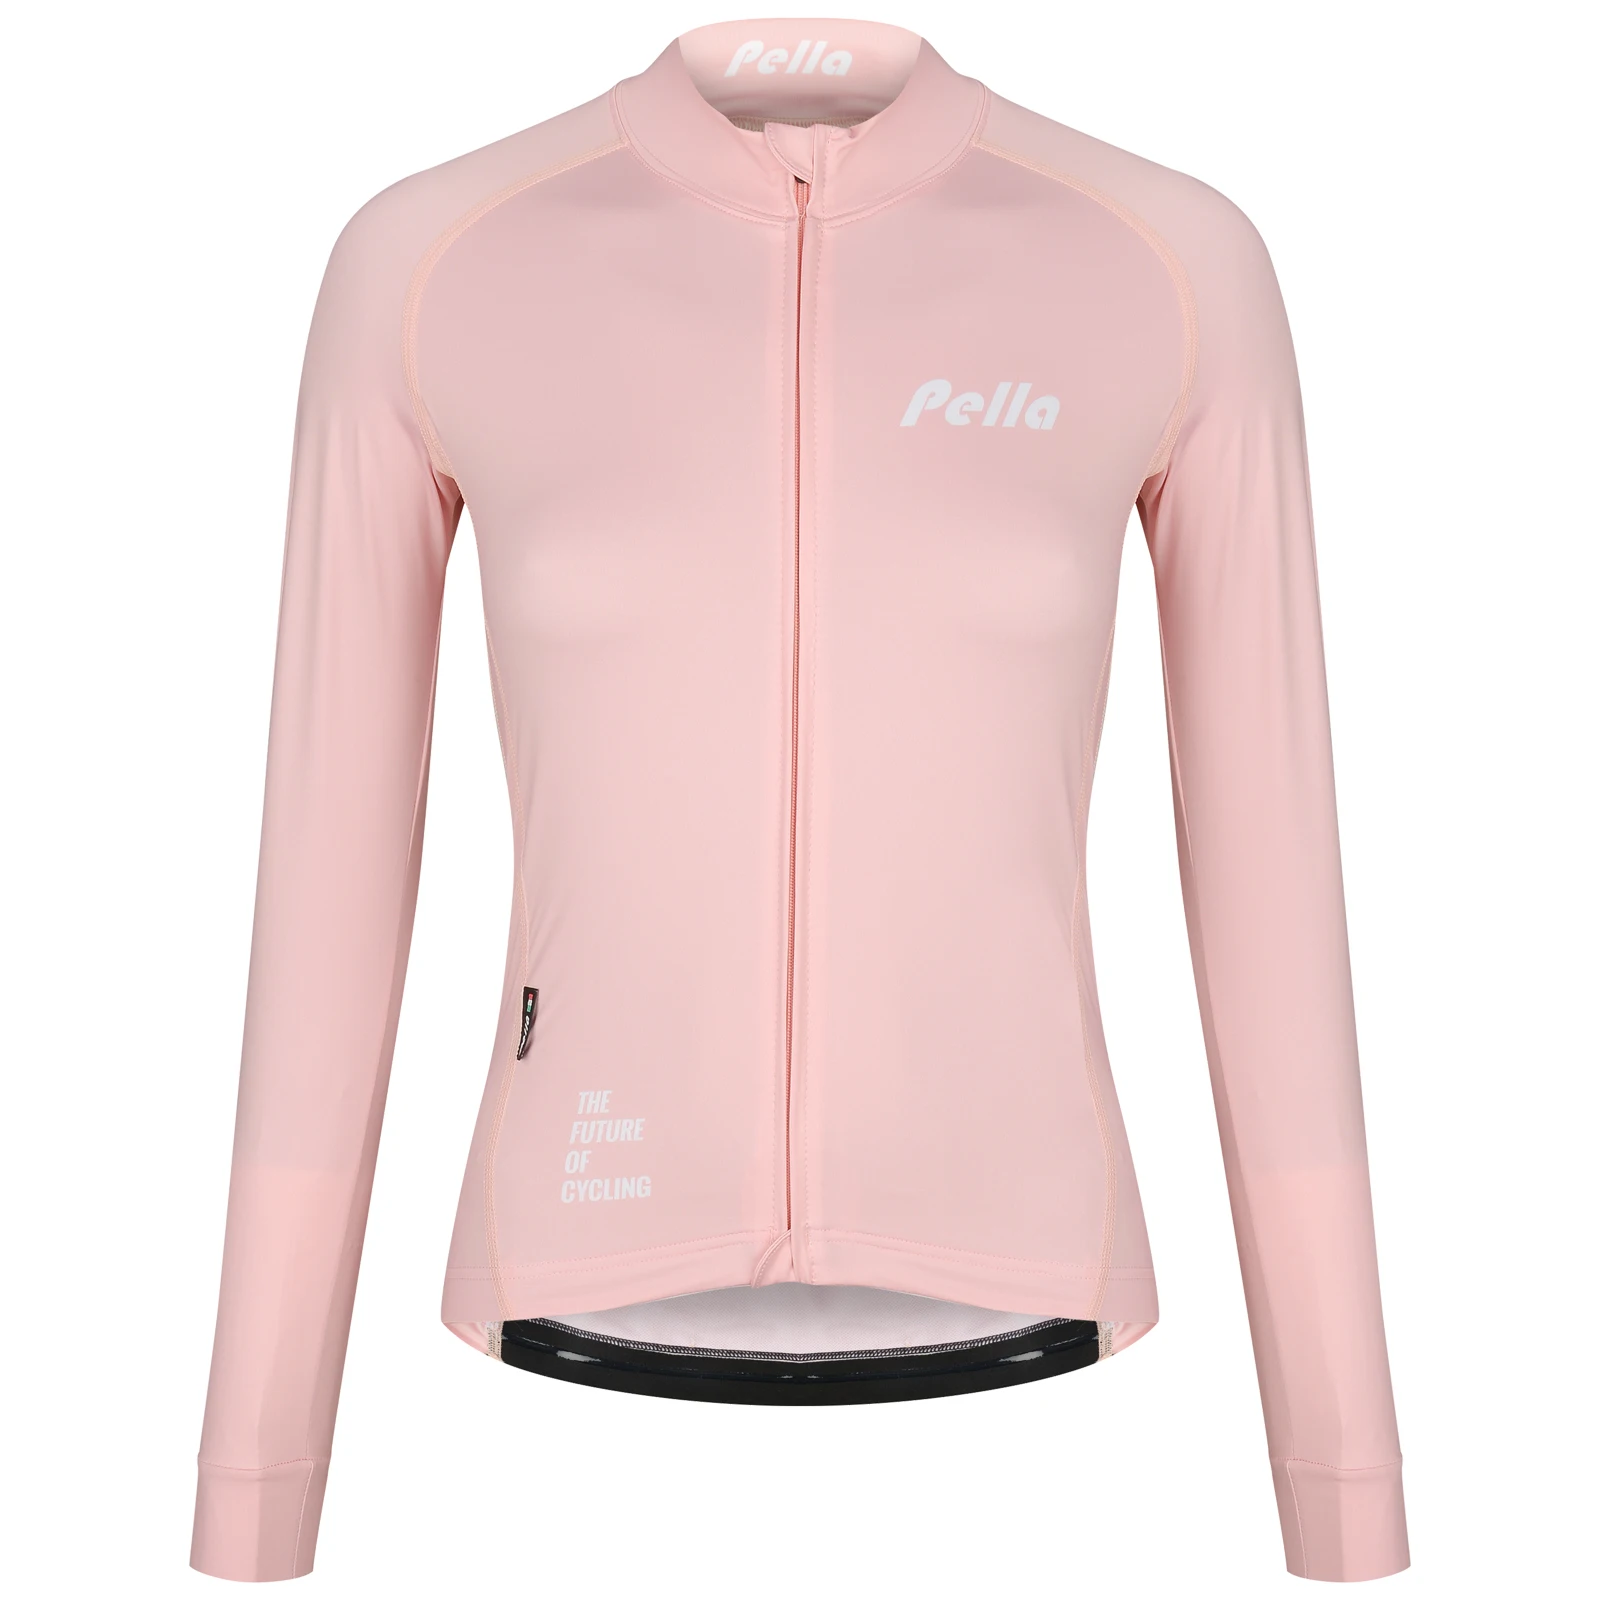 Pella Women's Cycling Jersey Long Sleeve Spring And Autumn Bicycle Running Thin Jacket Roupa Ciclismo Feminina Riding Equipment